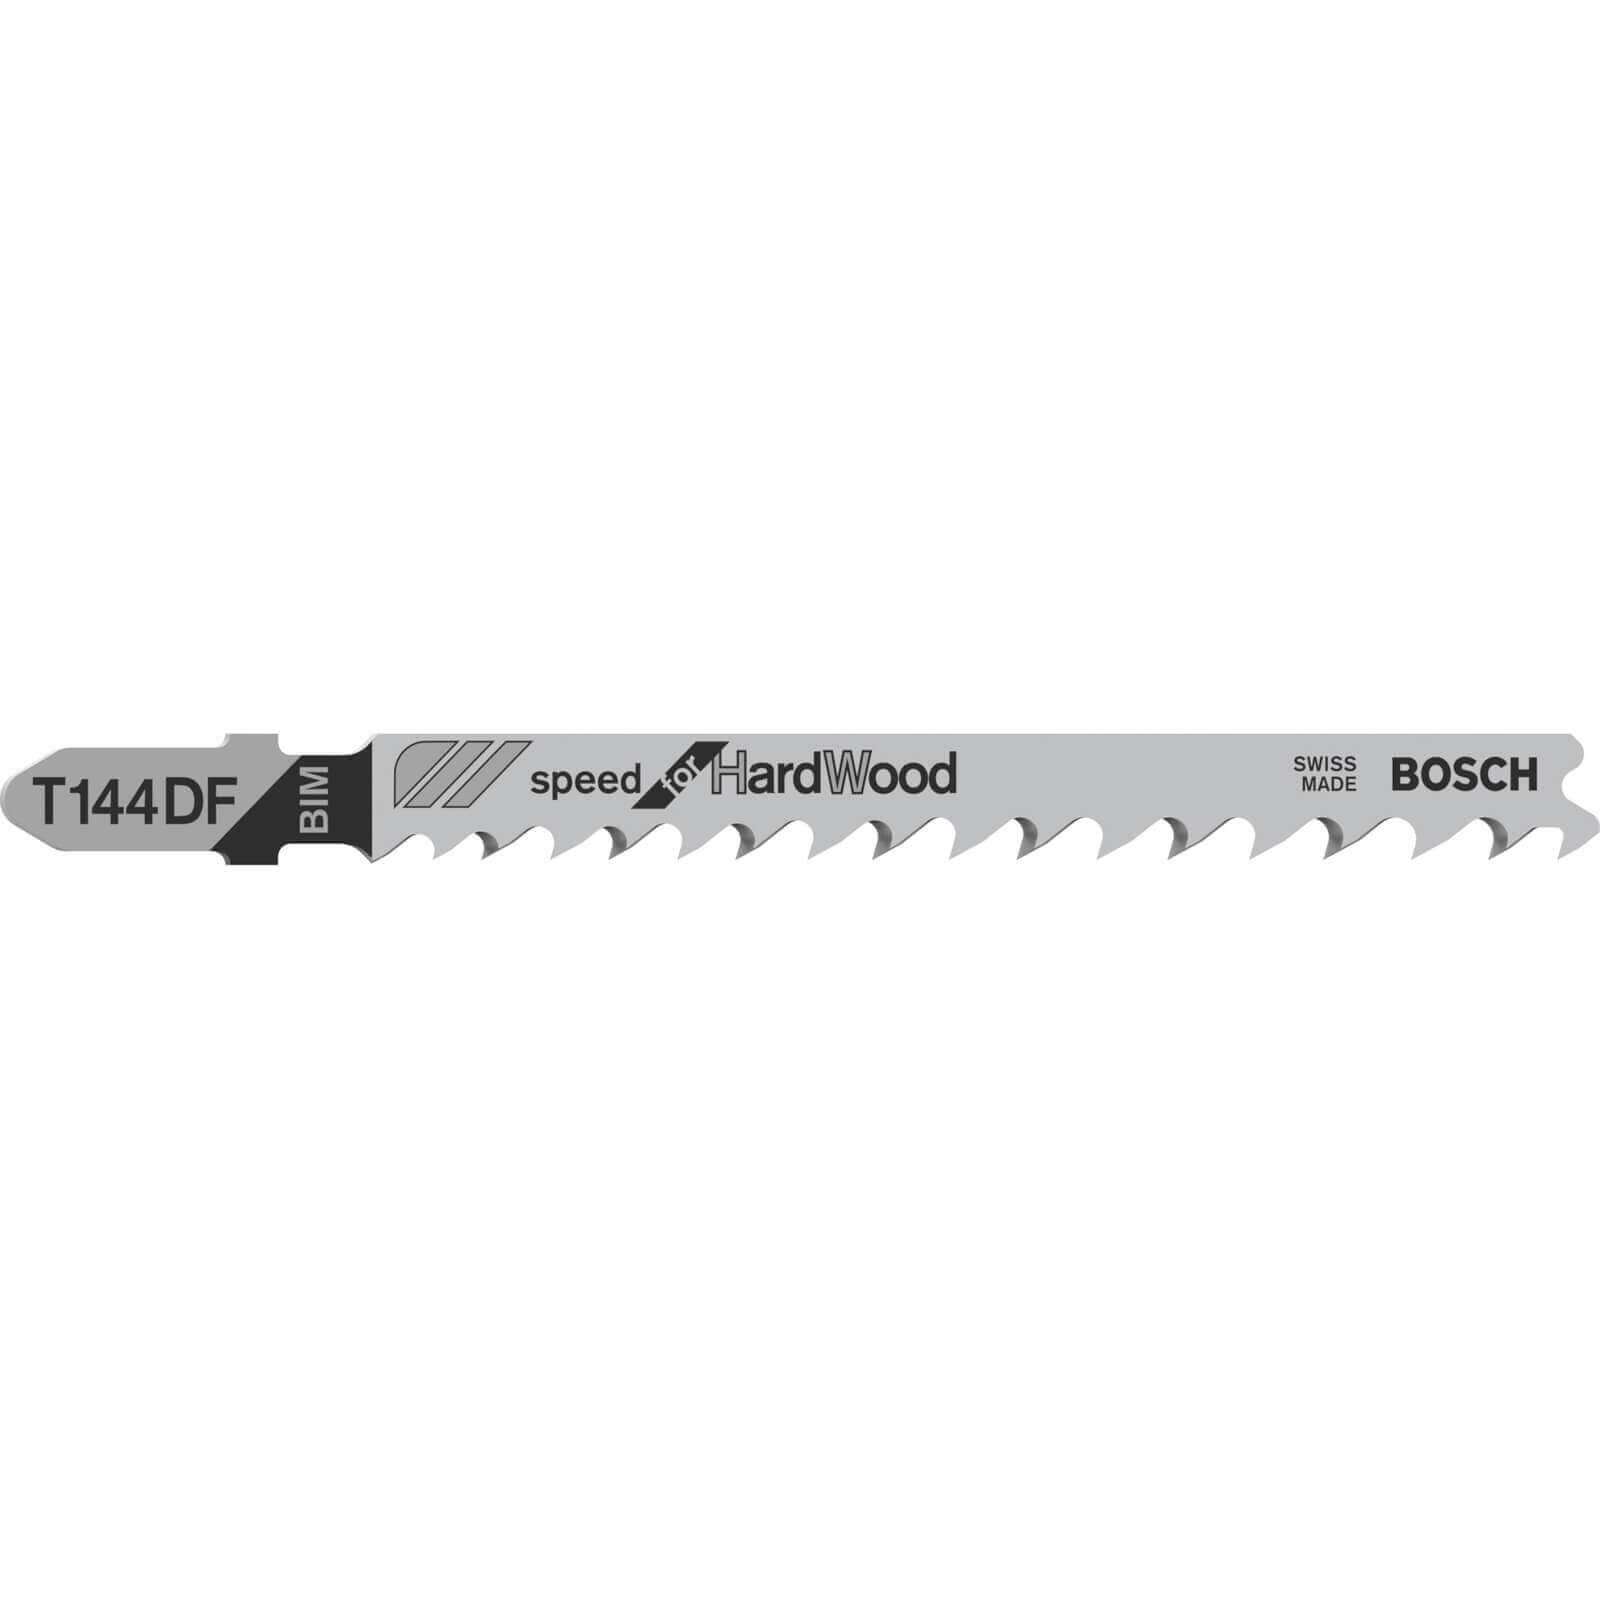 Bosch T144 DF Hard Wood Cutting Jigsaw Blades Pack of 5